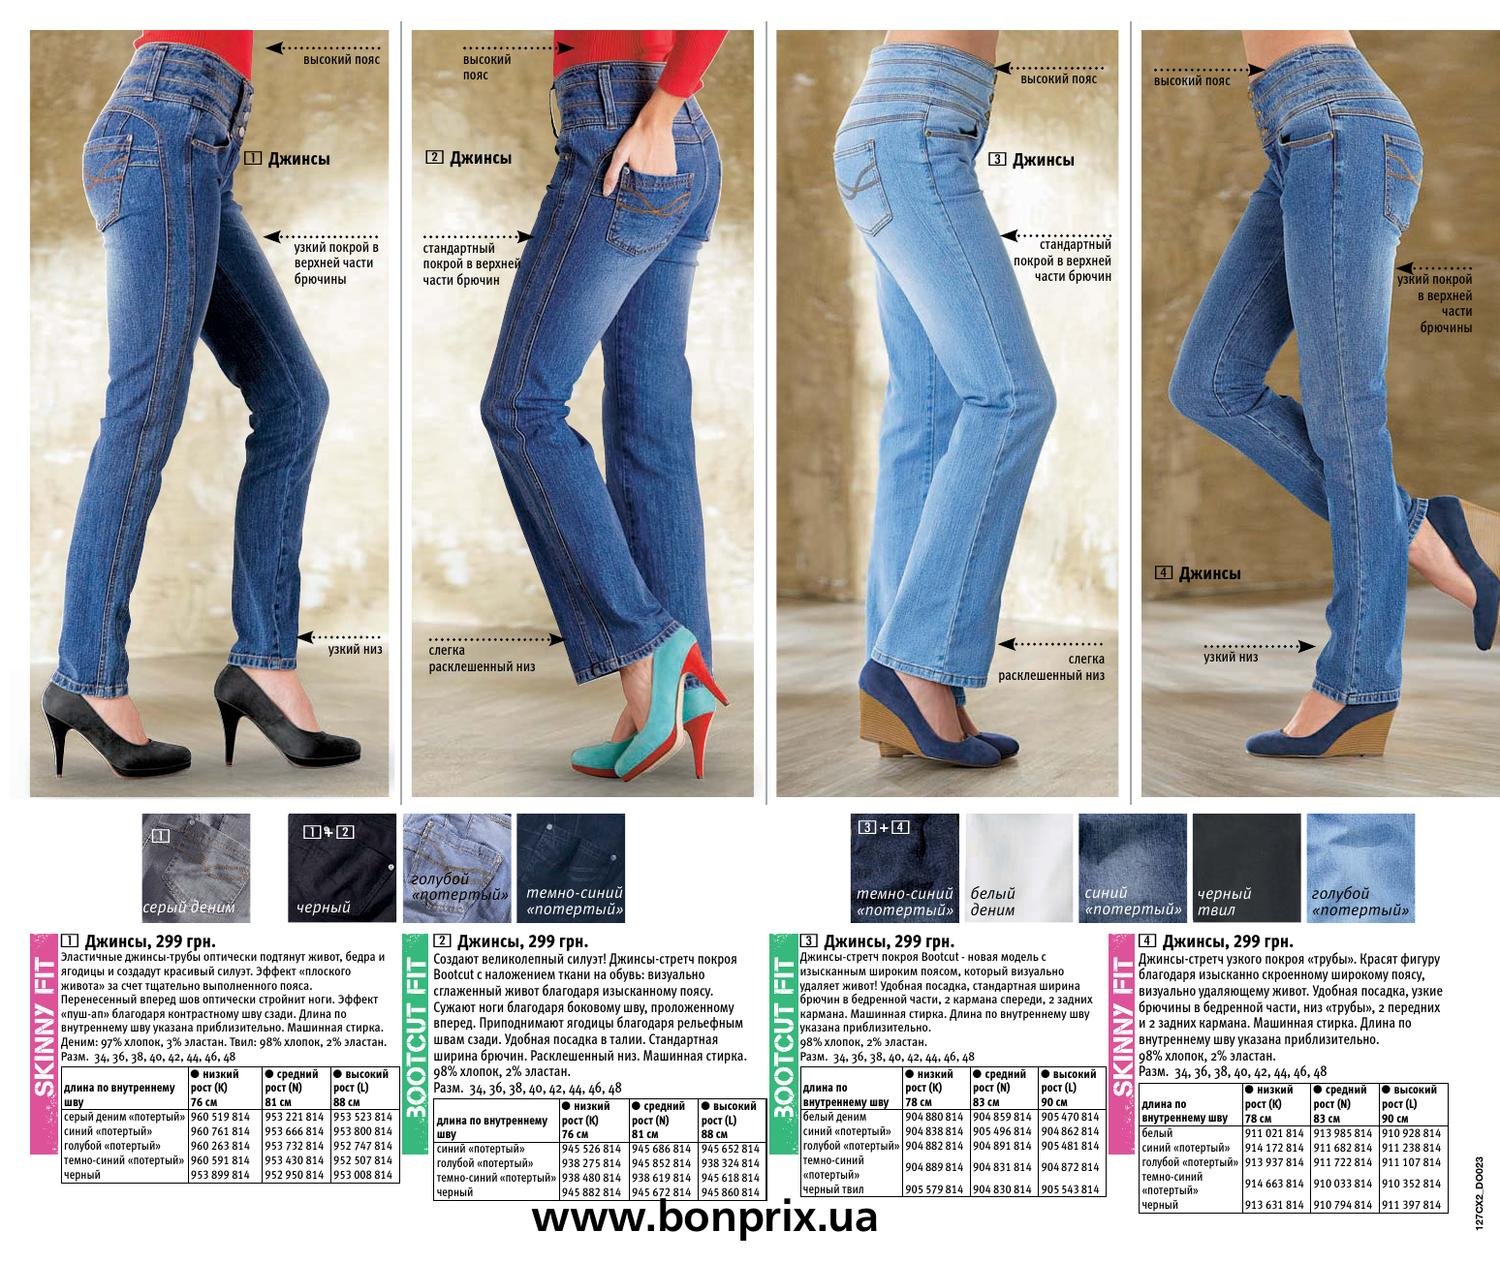 Разновидности джинсов